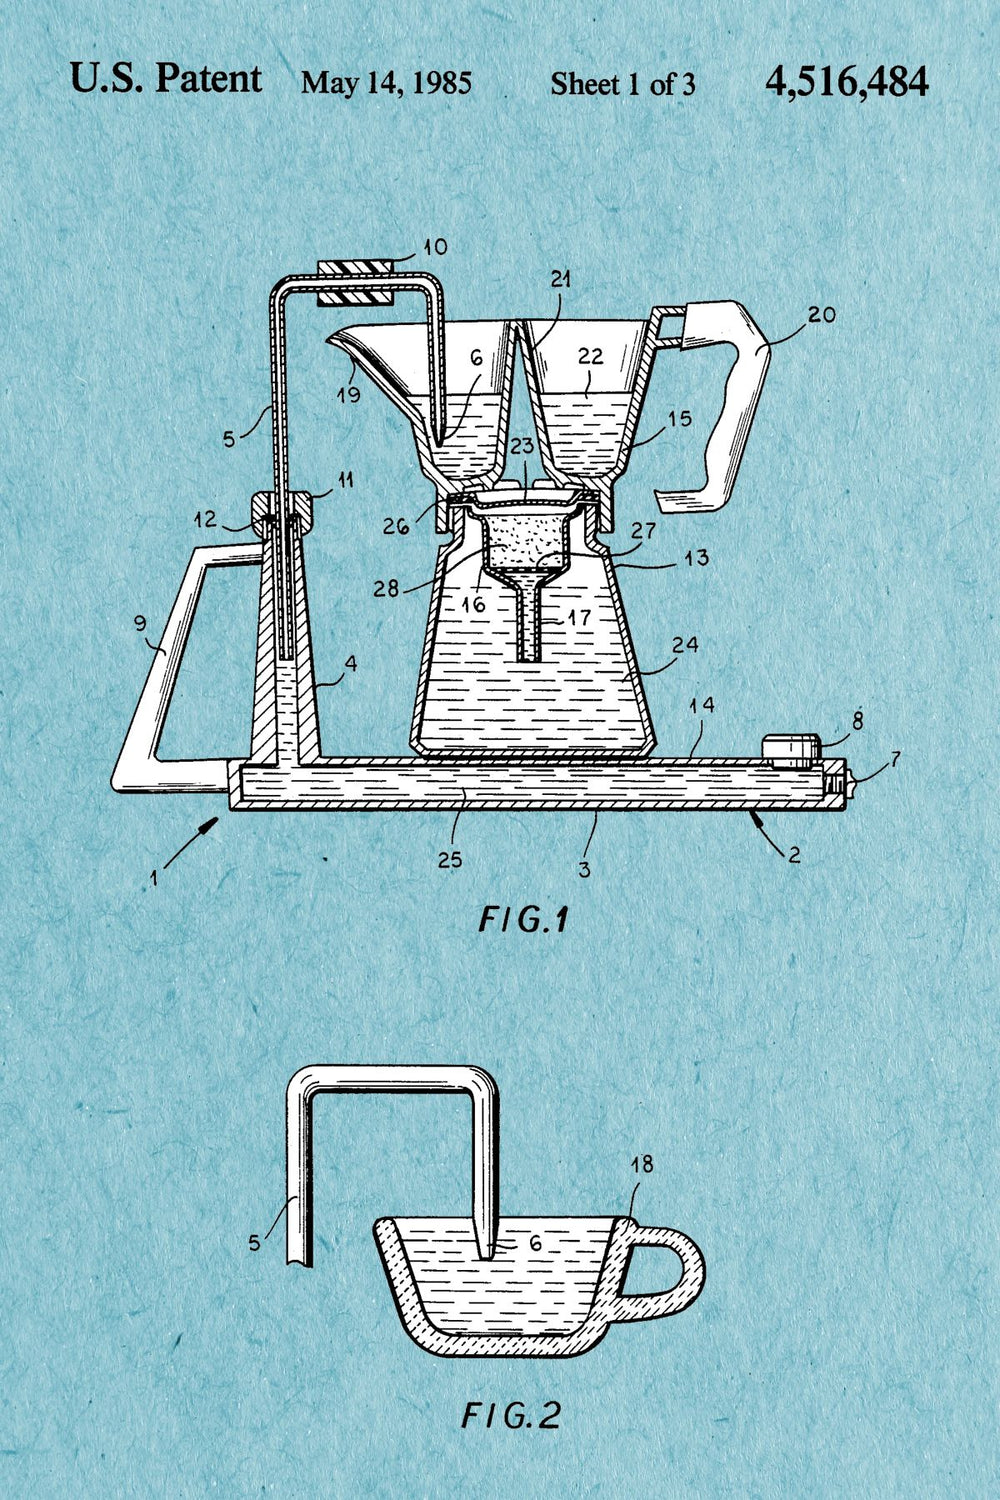 Hot Beverage Appliance Patent